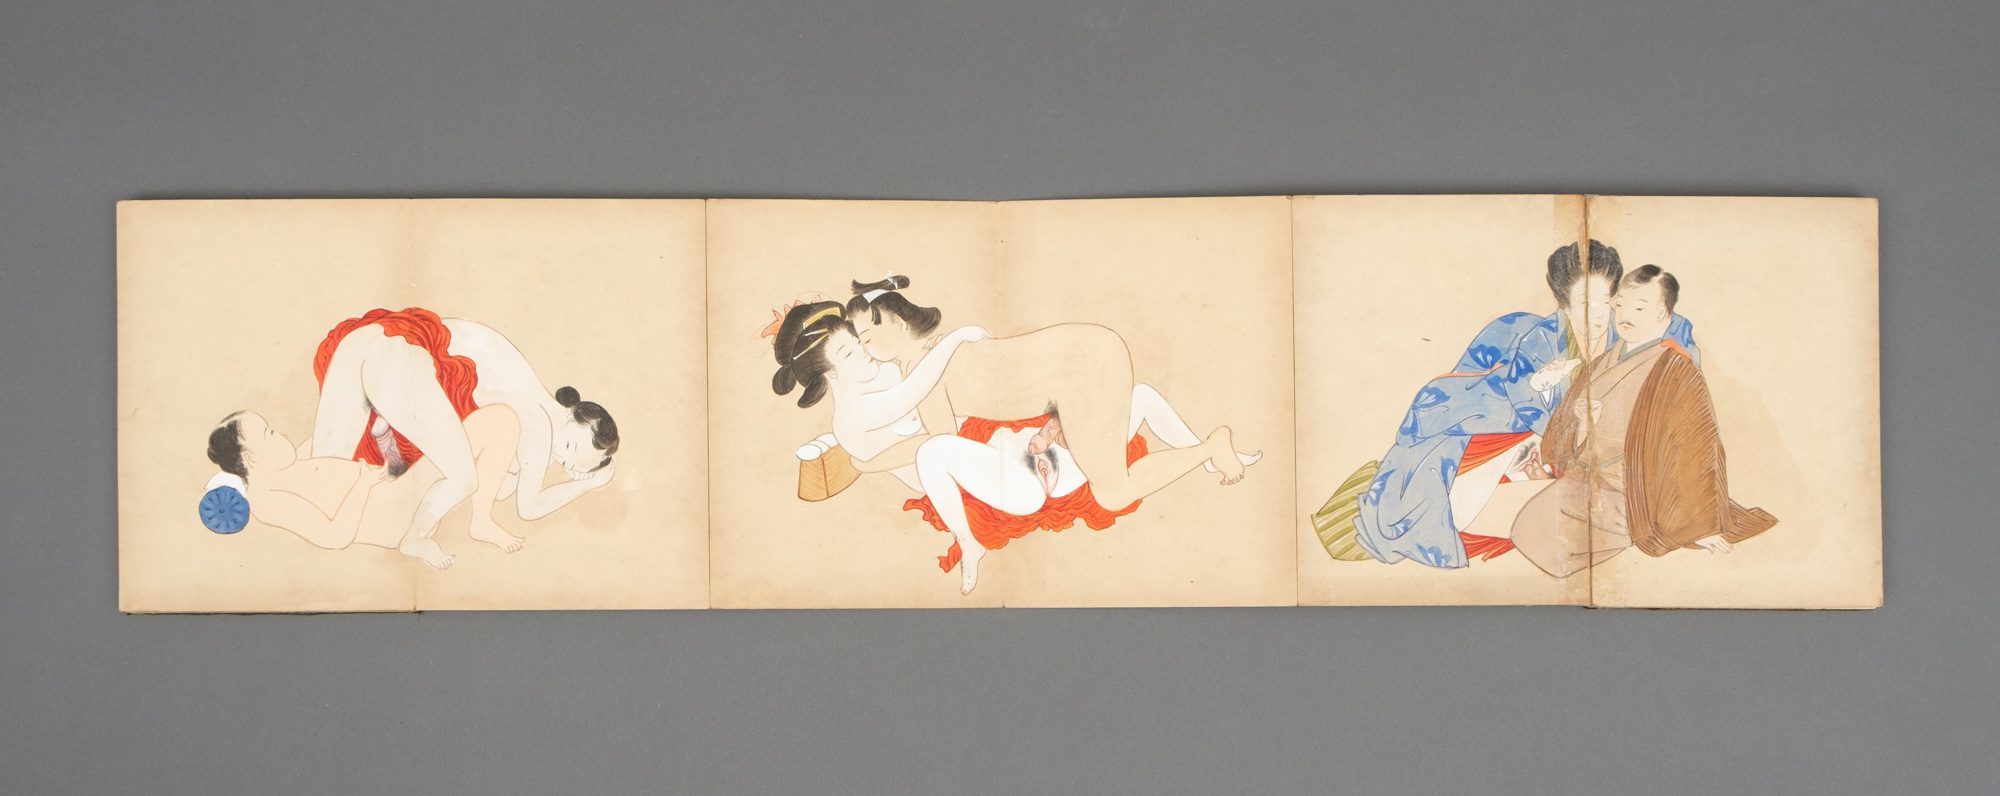 A JAPANESE EROTIC BOOK “SHUNGA”, 1912-1926 (TAISHO PERIOD) - Image 7 of 29